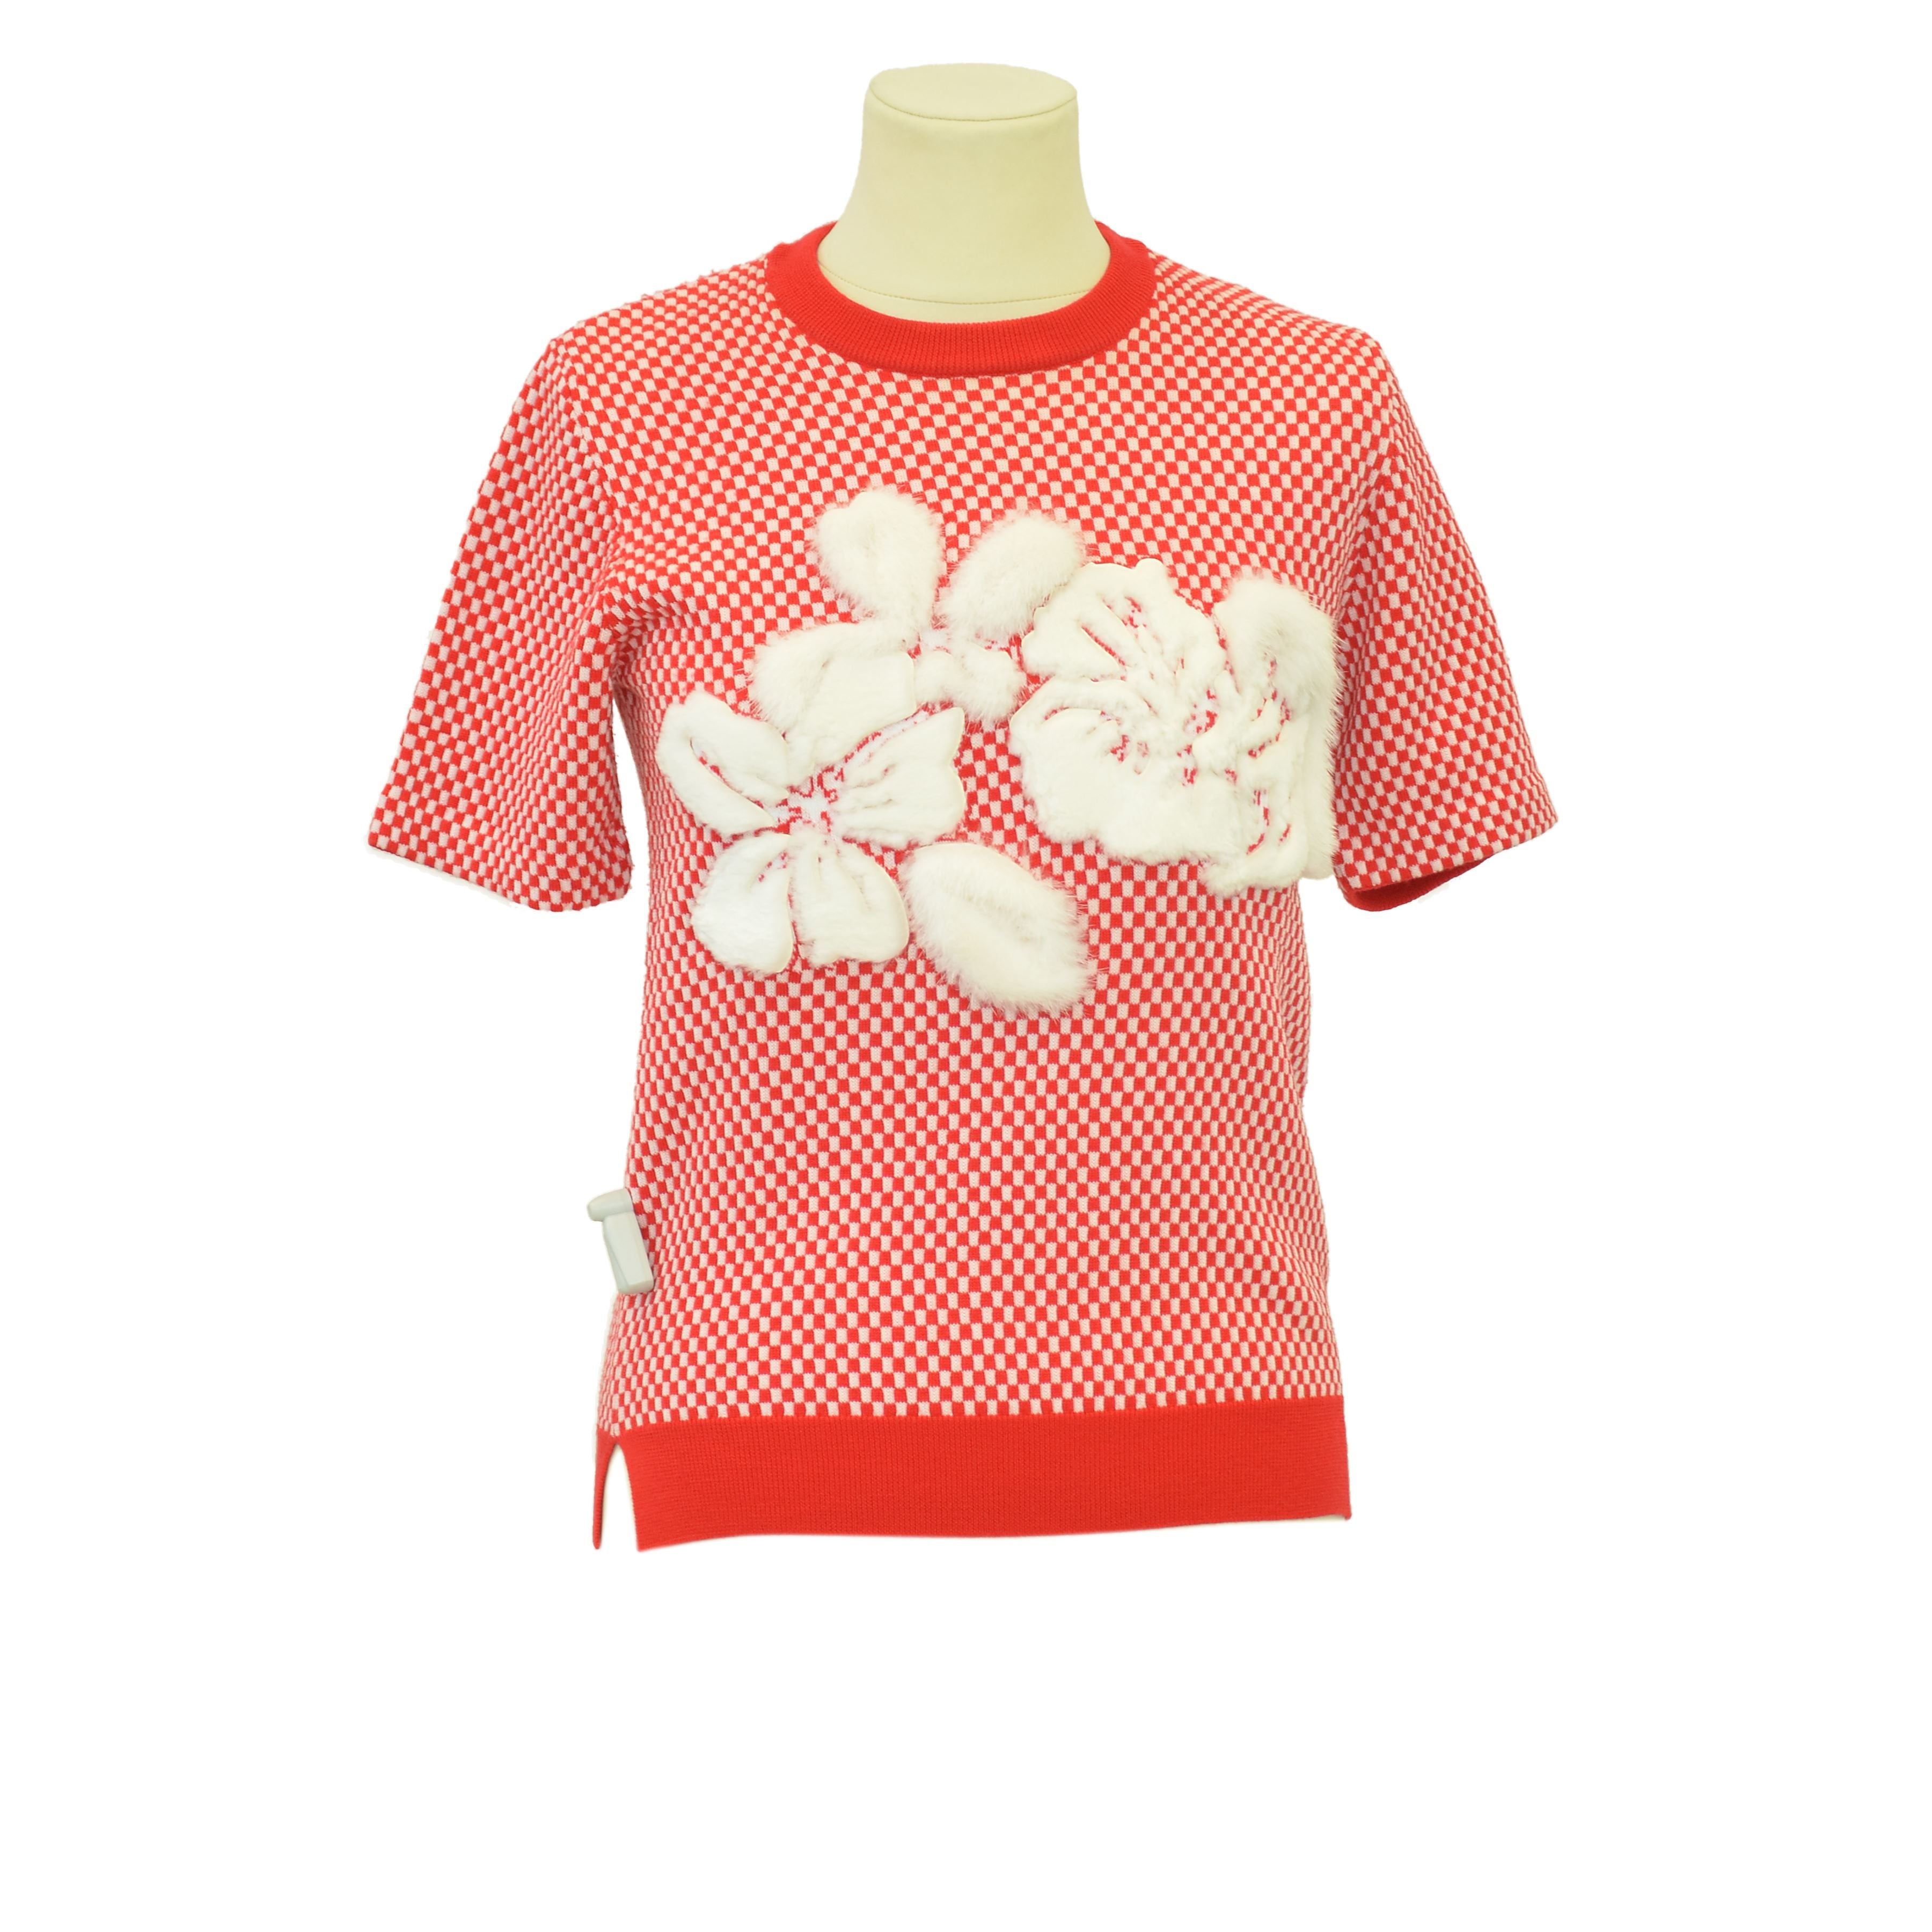 Red/White Knitted Argyll Pattern Tshirt w/ Fur Clothing Fendi 